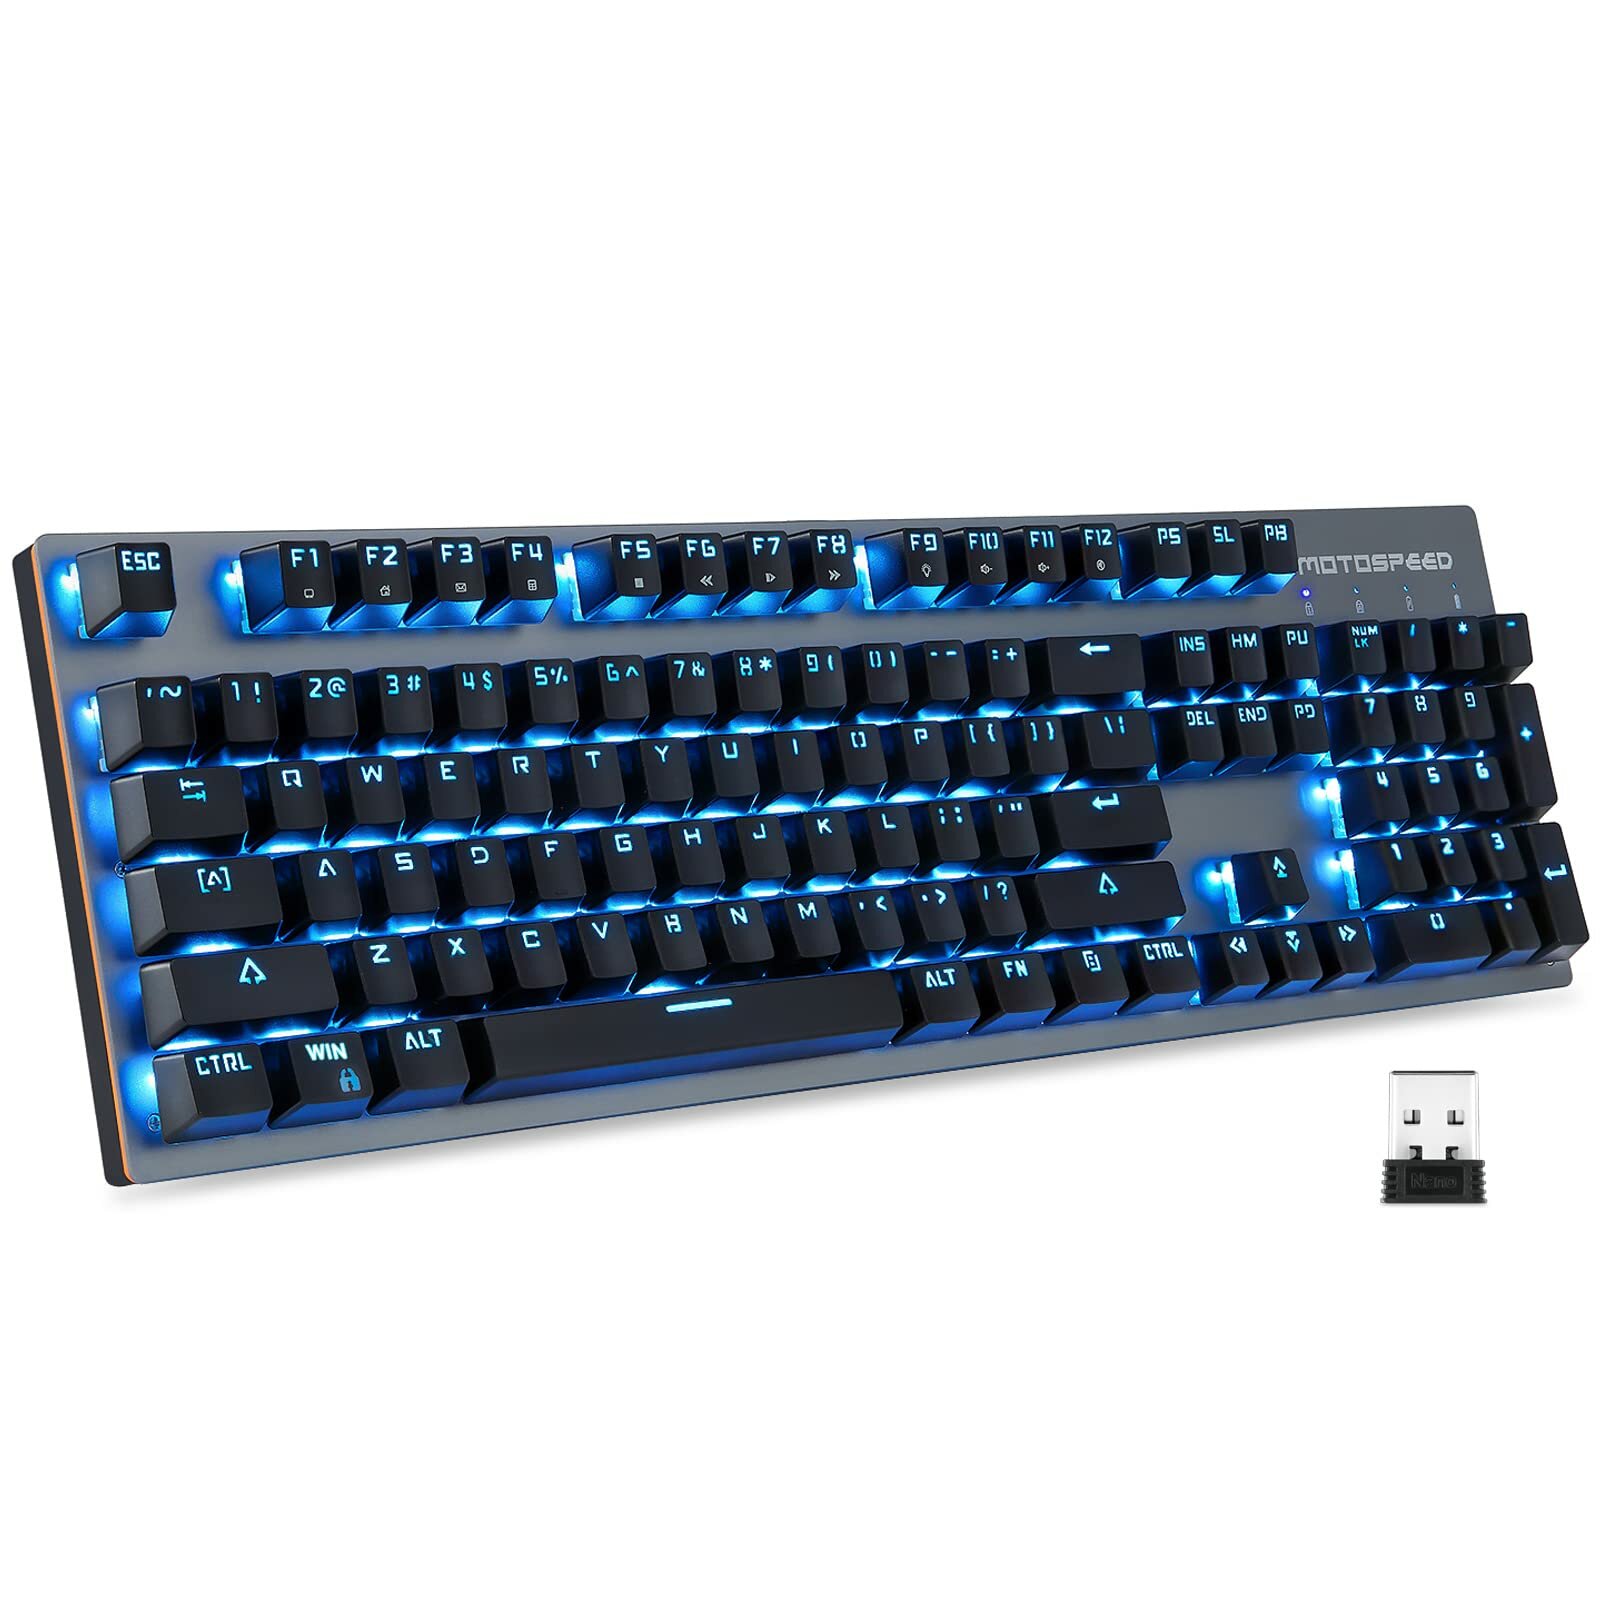 

MOTOSPEED GK89 104 Keys Dual Mode Mechanical Gaming Keyboard RGB Backlit NKRO 2.4GHz Wireless/USB Wired Gaming Keyboard